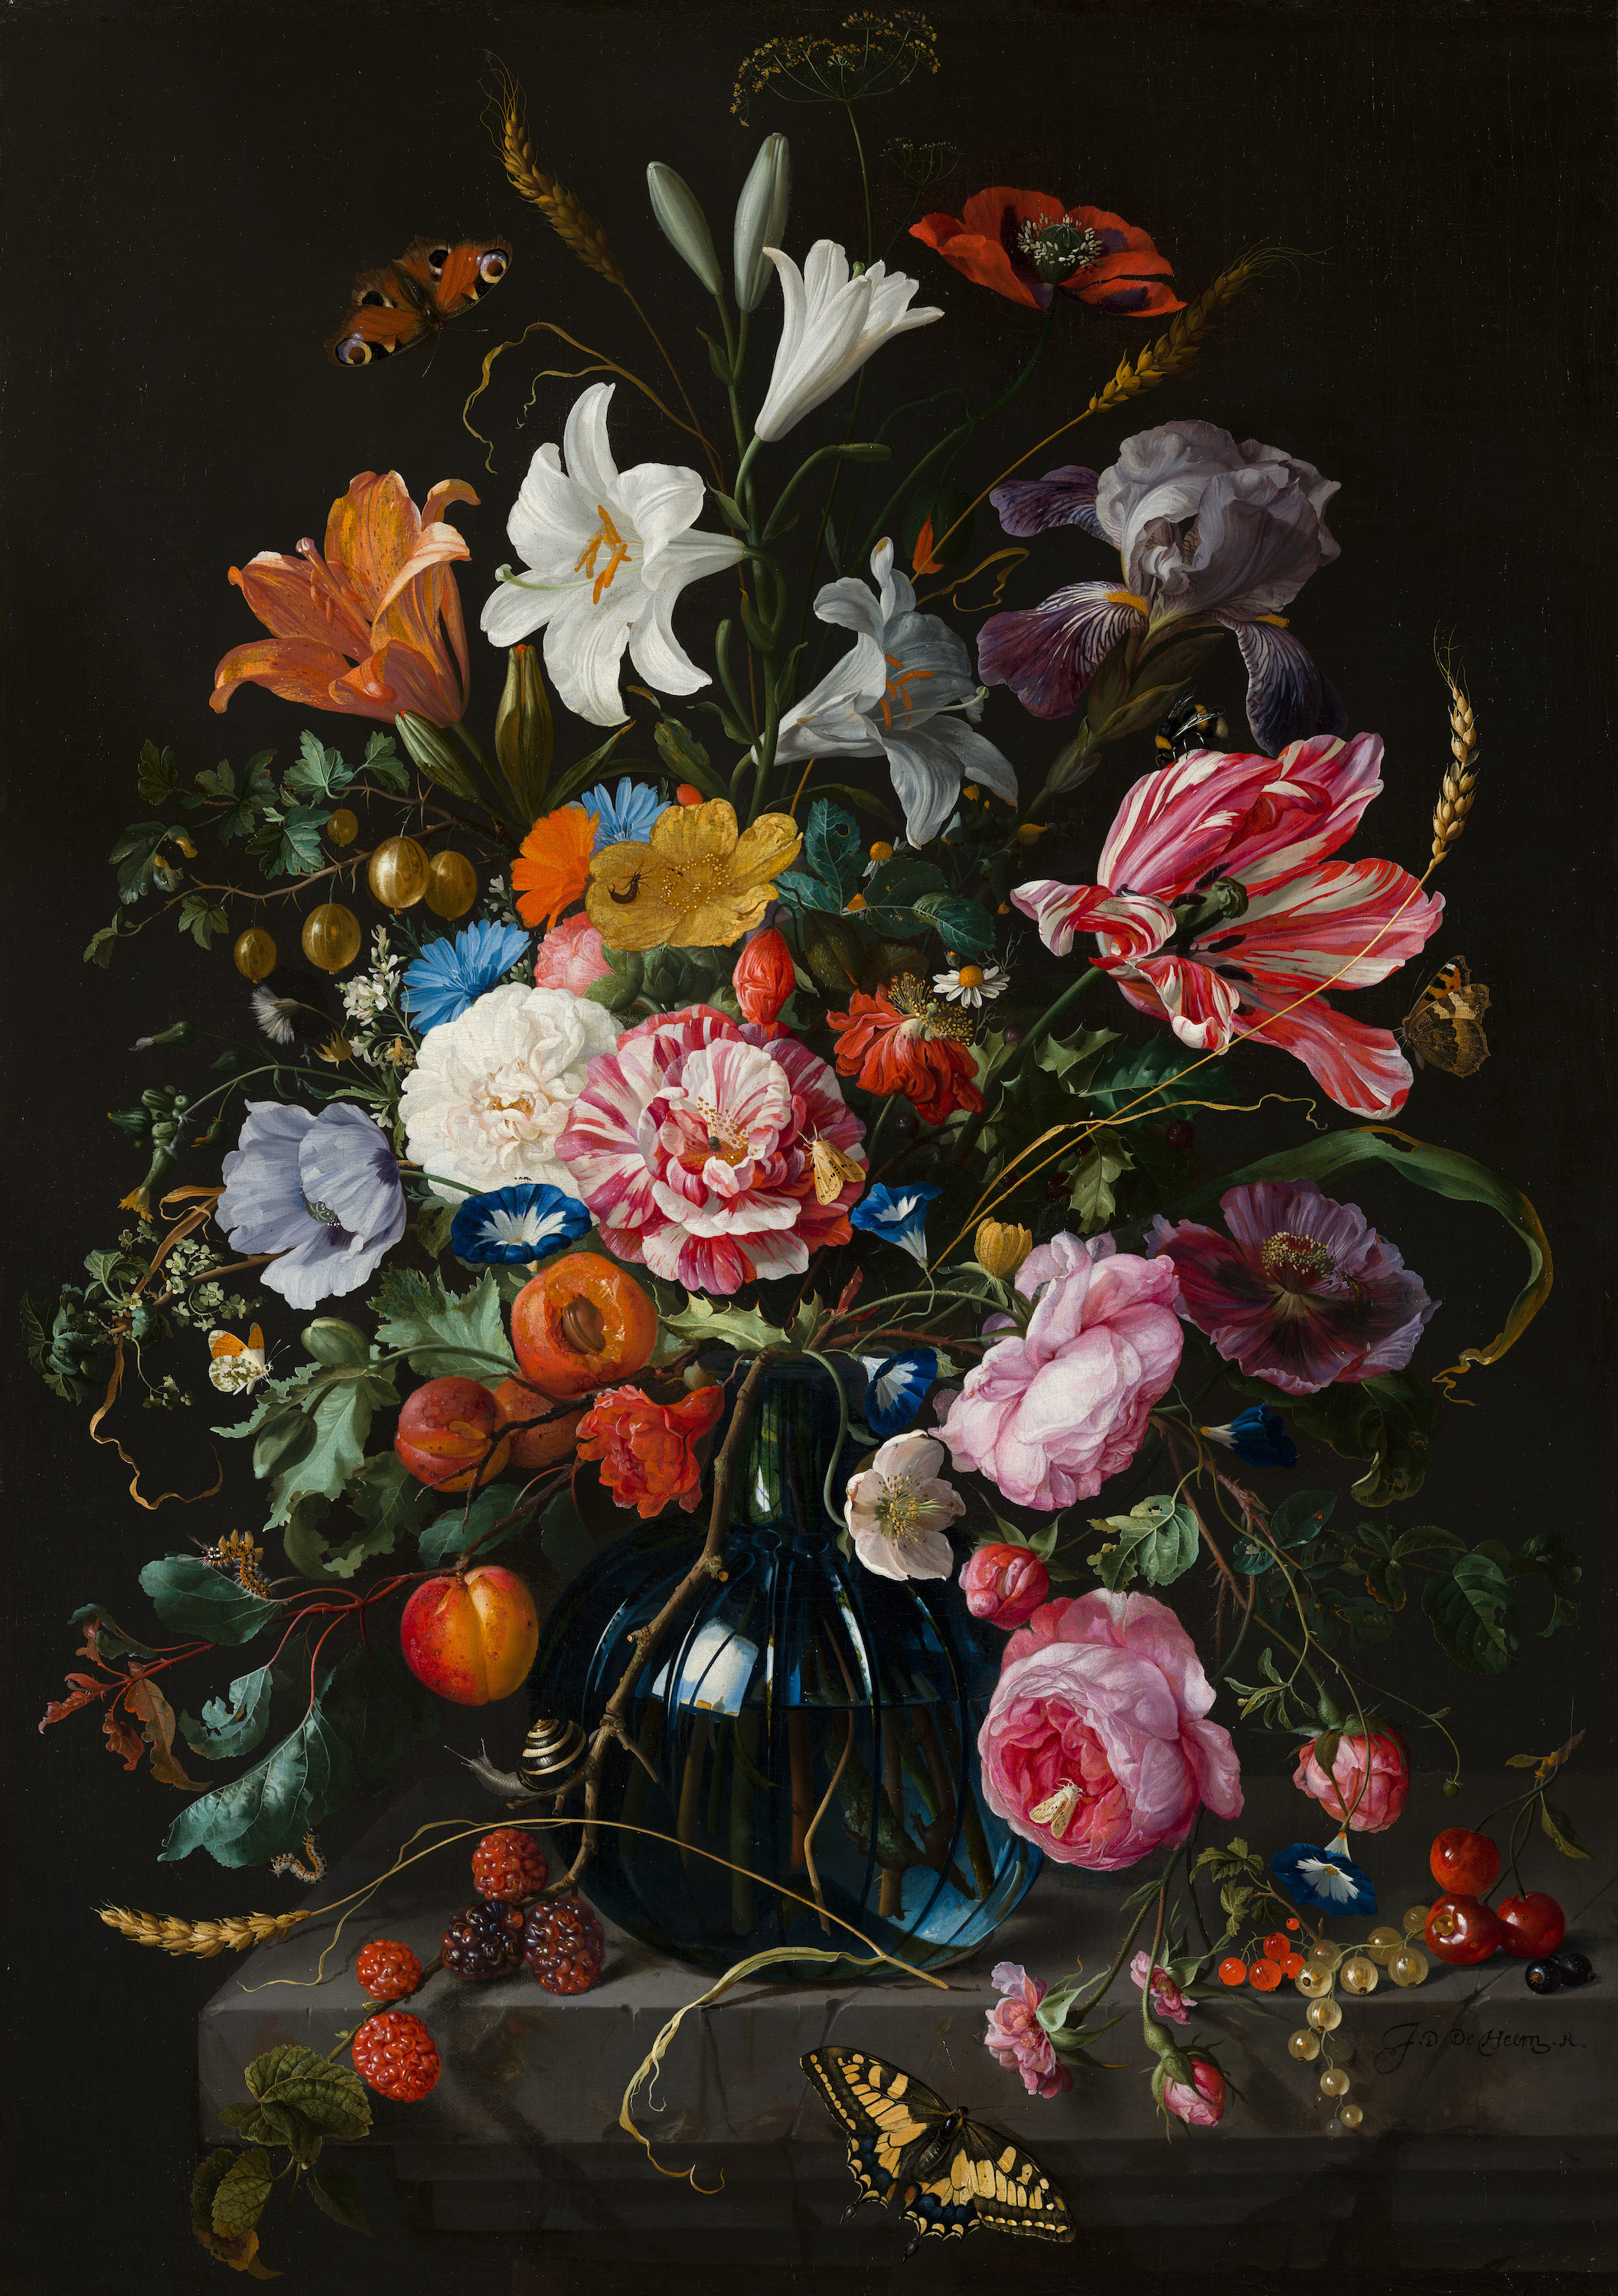 Çiçek Vazosu (orig. "Vase of Flowers") by Jan Davidsz de Heem - 1670 - 52.6 x 74.2 cm 